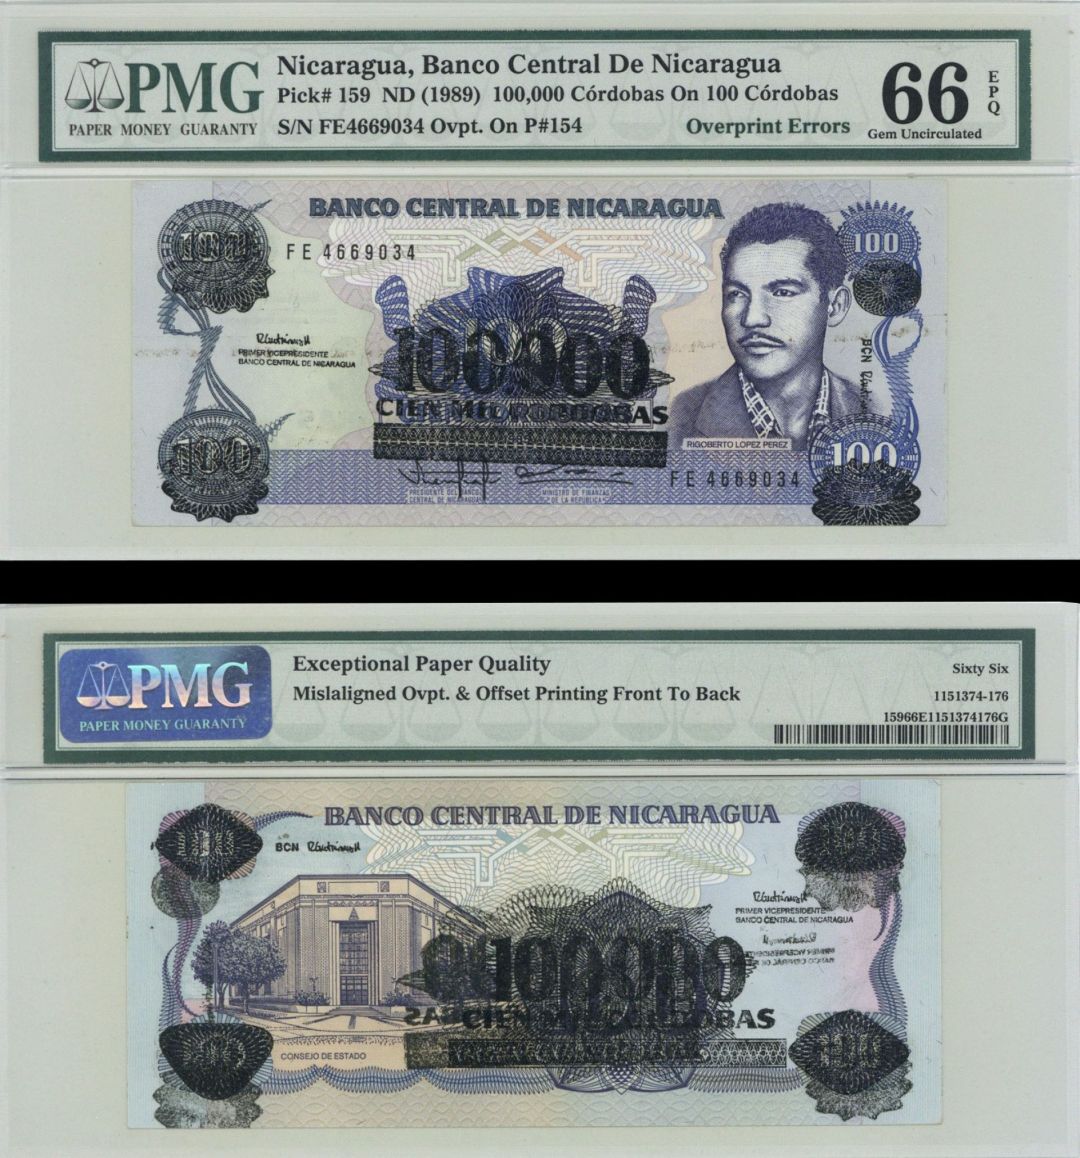 Nicaragua - 100,000 Cordobas on 100 Cordobas - P-159 - PMG 66 - Foreign Paper Money Error